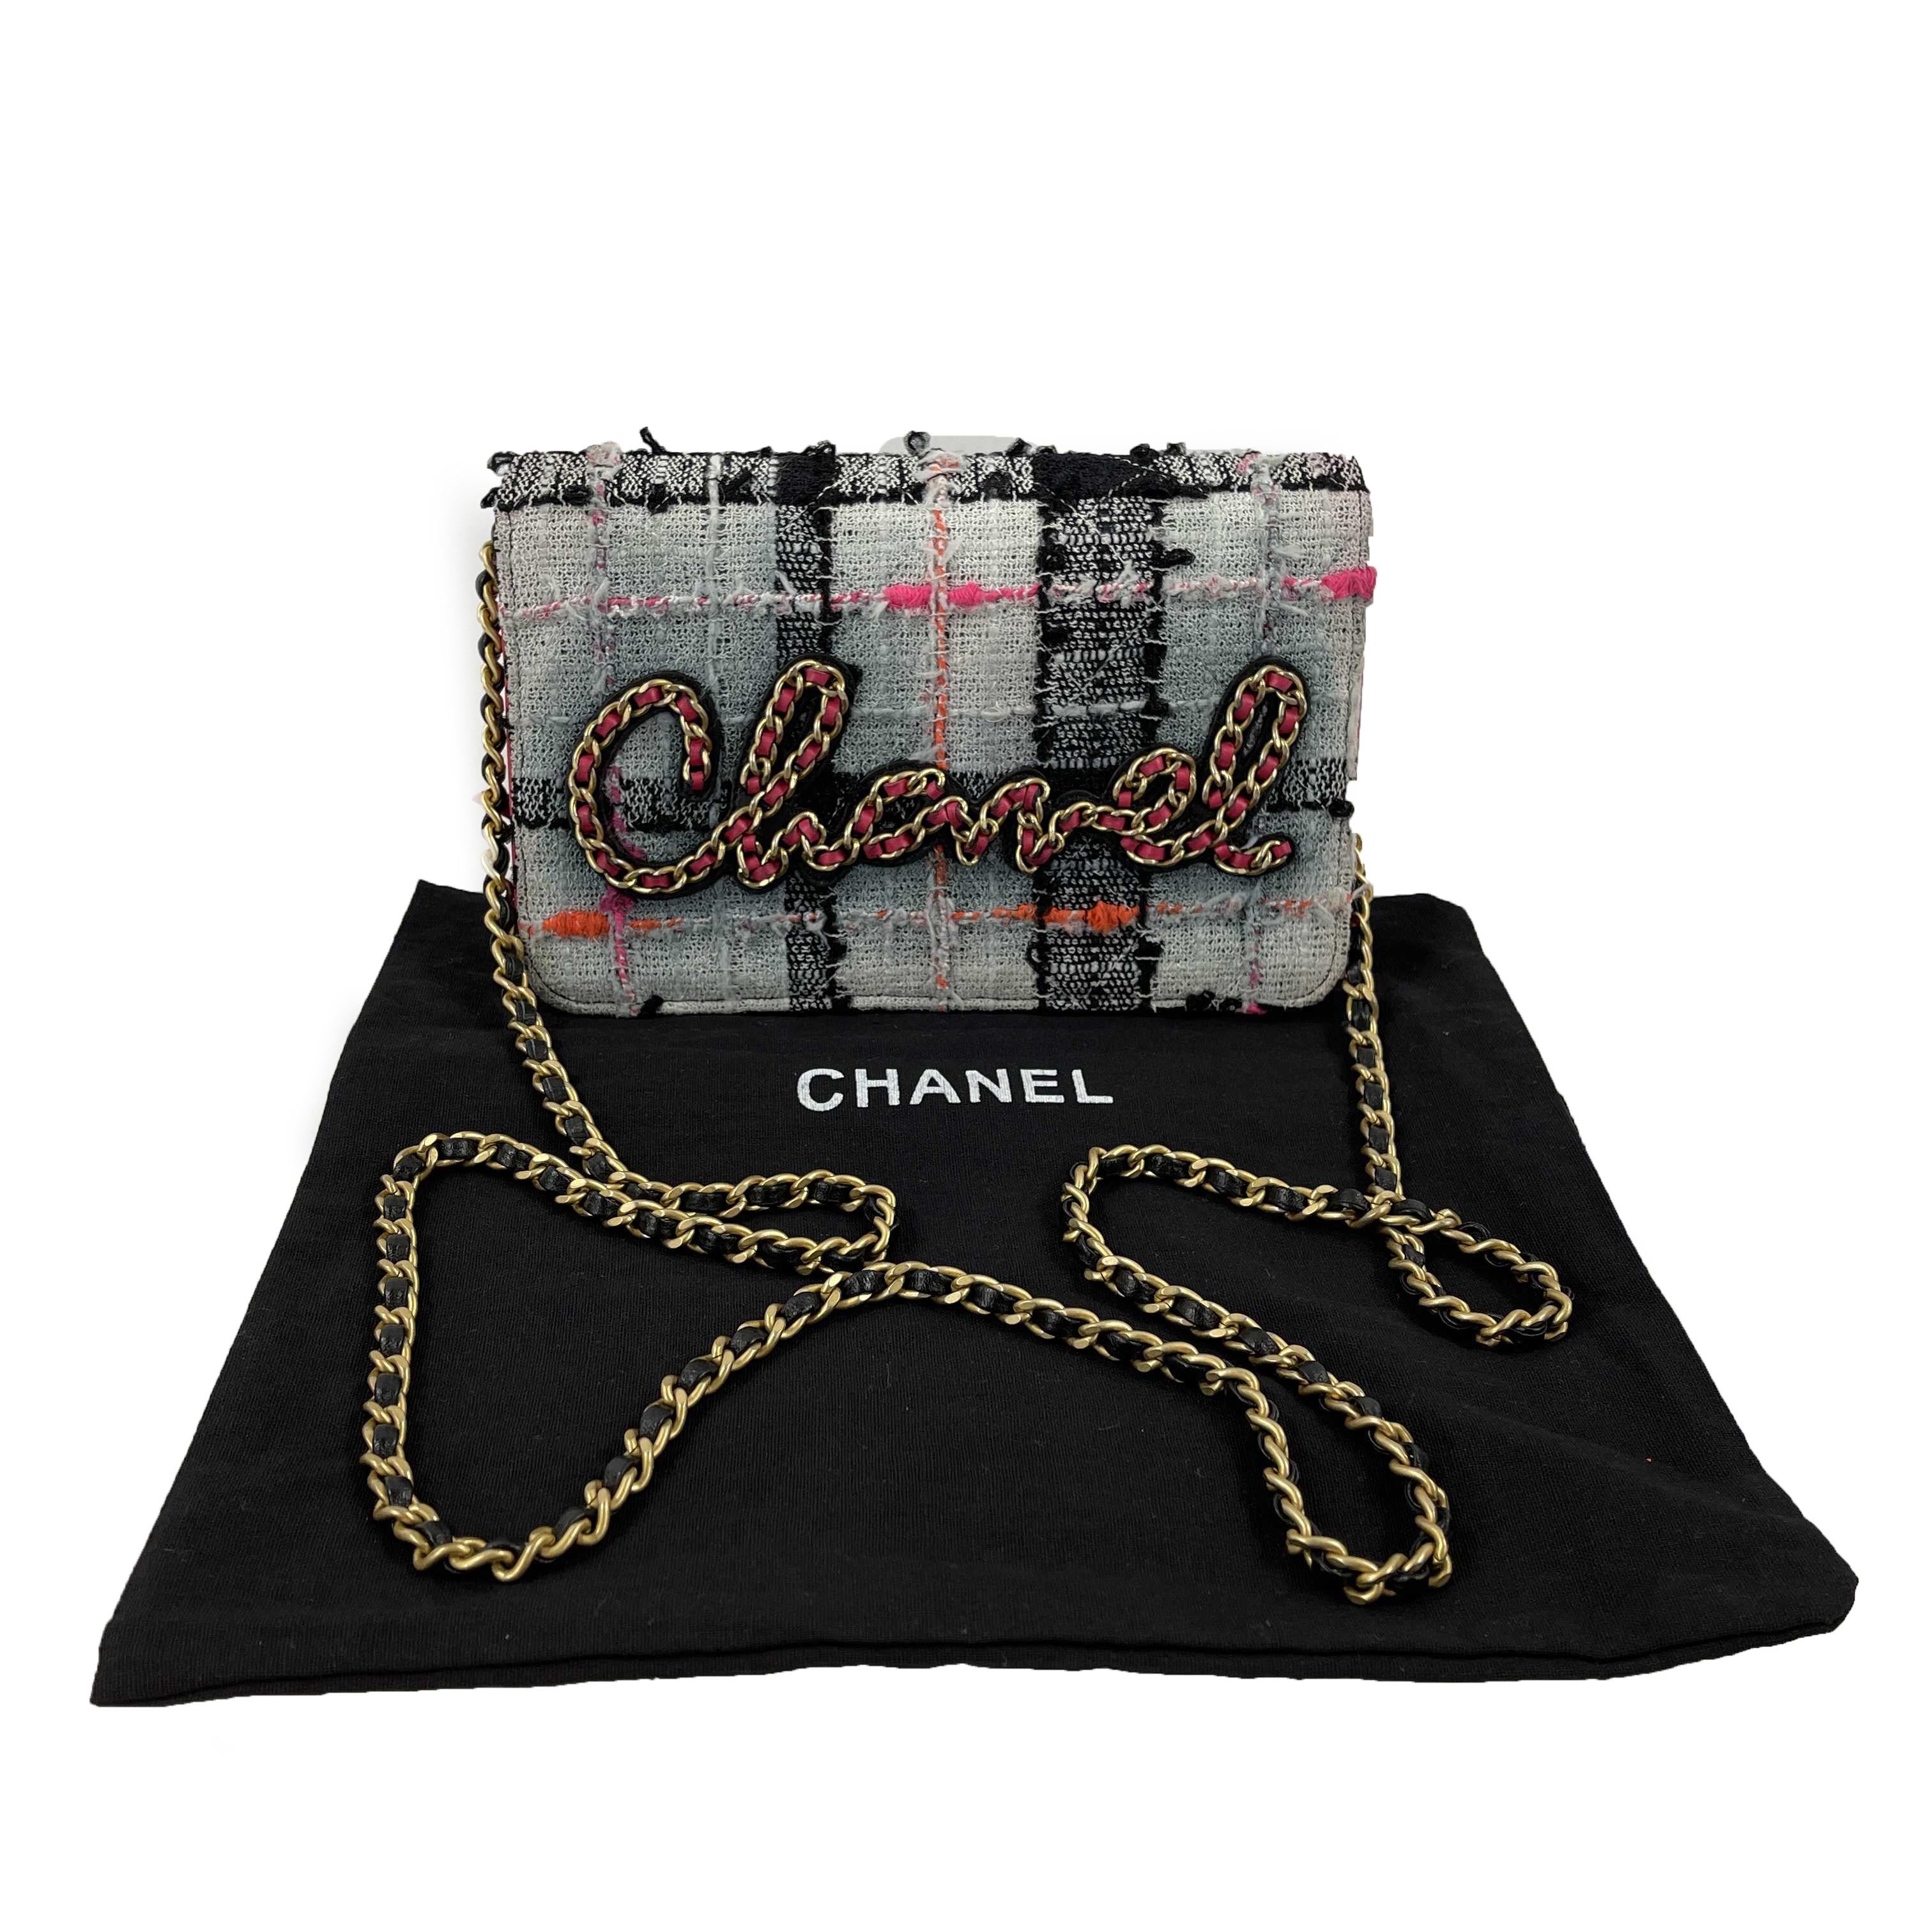 CHANEL - 2019 Tweed Pink / Orange / Gold 'Chanel' Wallet on Chain / Crossbody 1